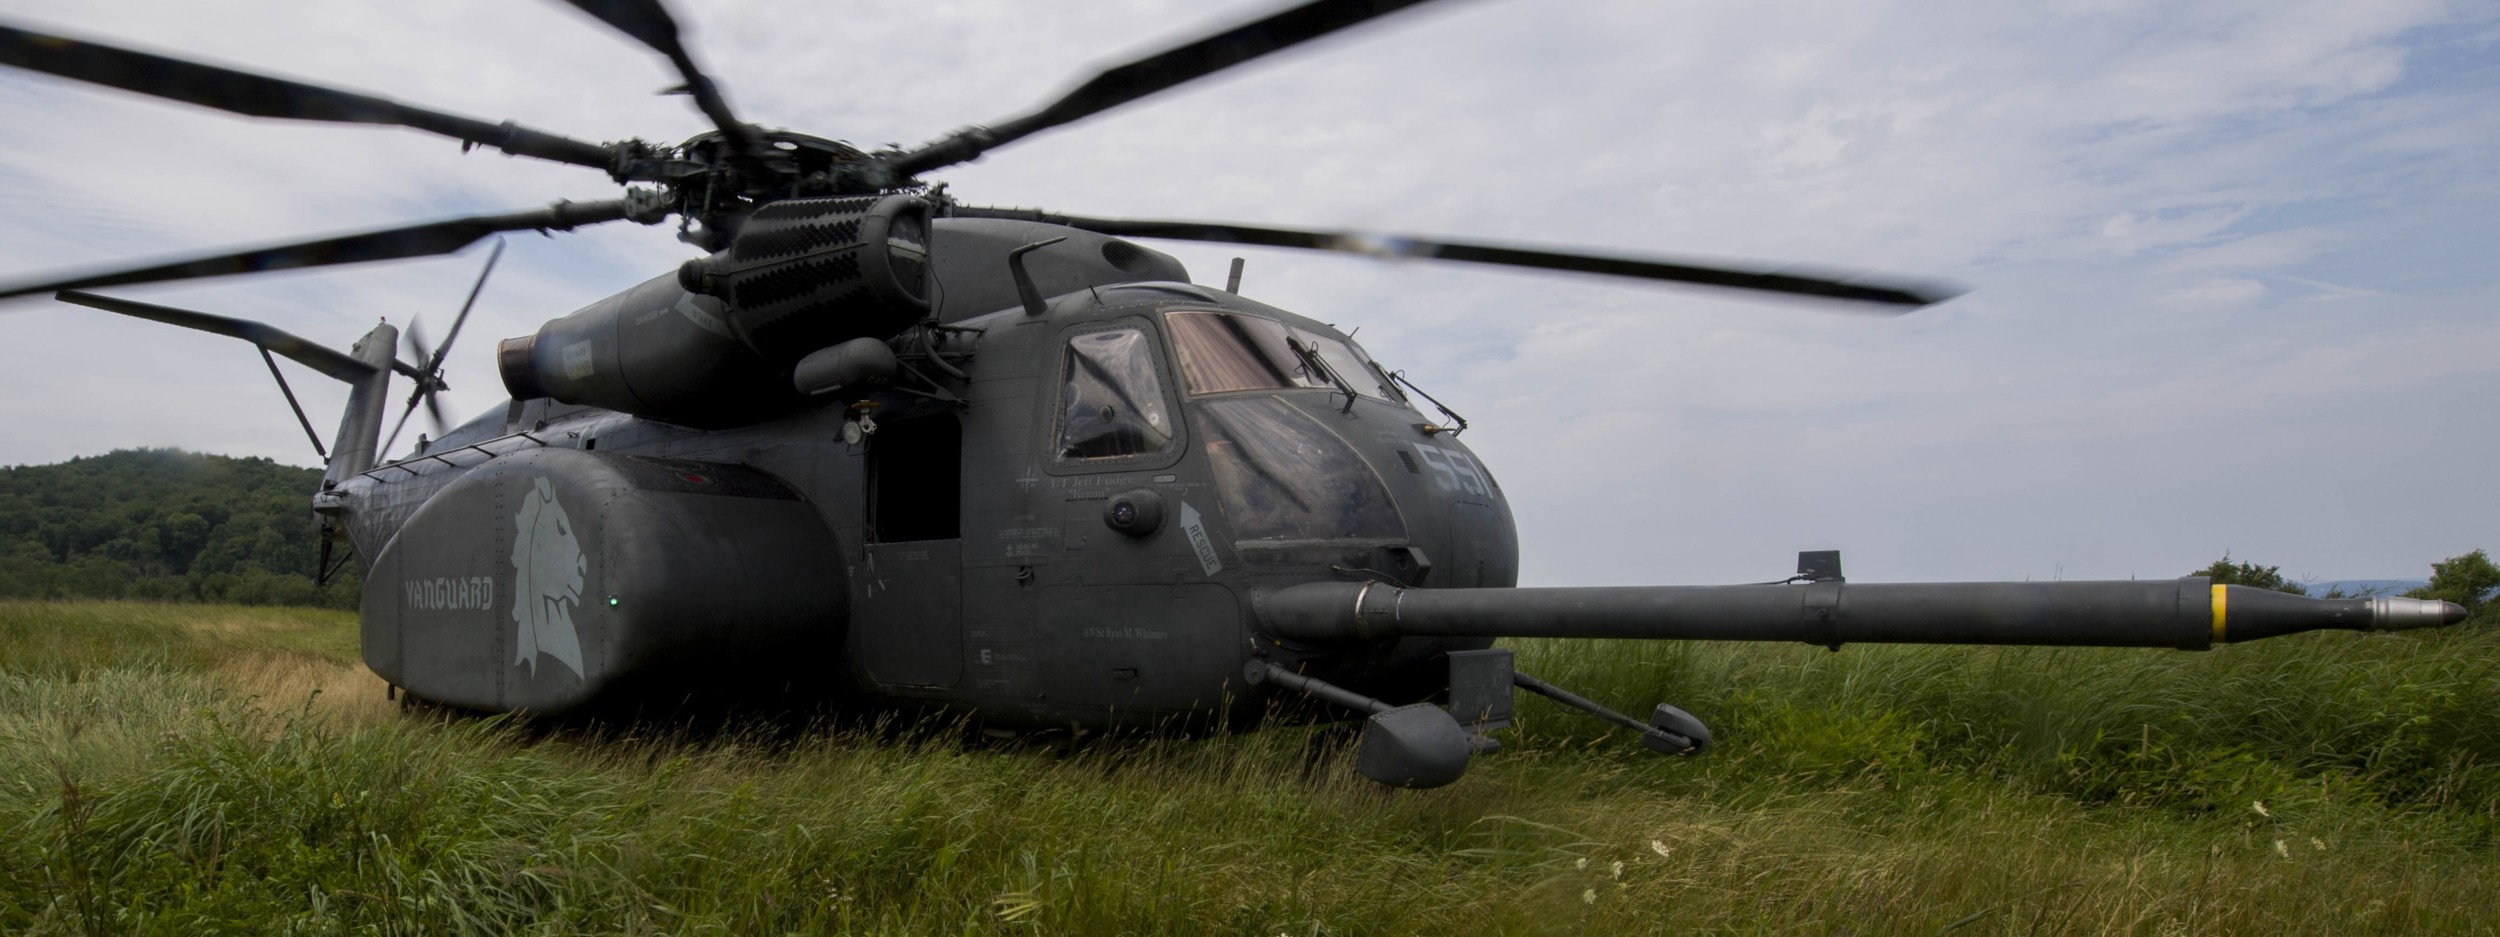 hm-14 vanguard helicopter mine countermeasures squadron navy mh-53e sea dragon 102